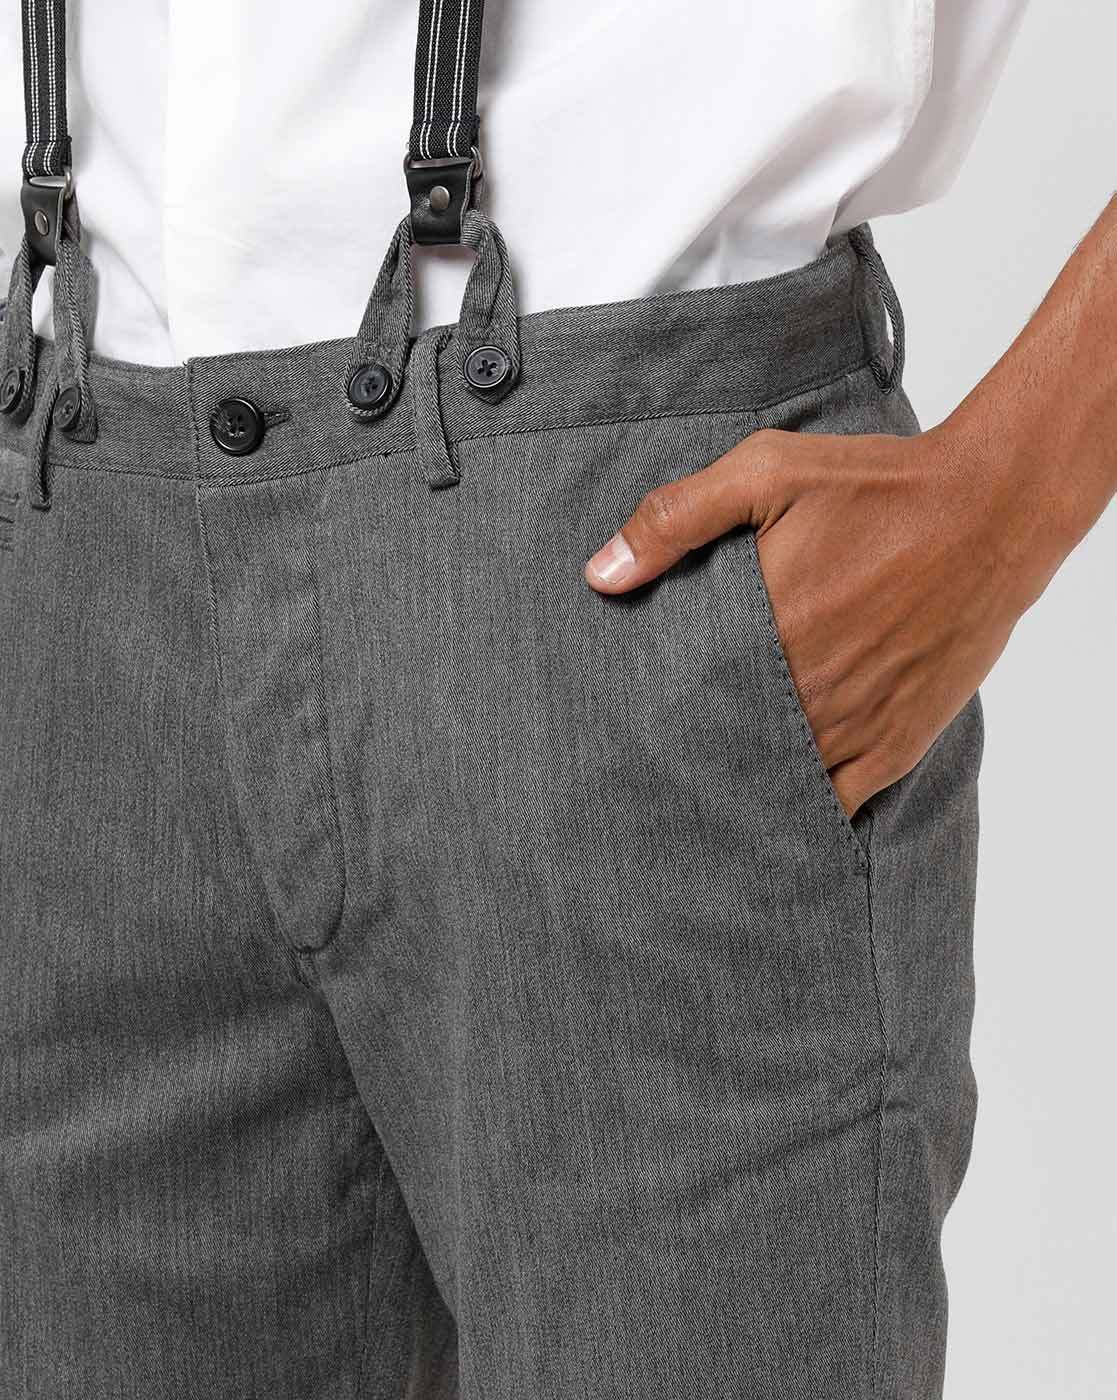 Gray Pants Leather Suspenders Groomsmen Attire